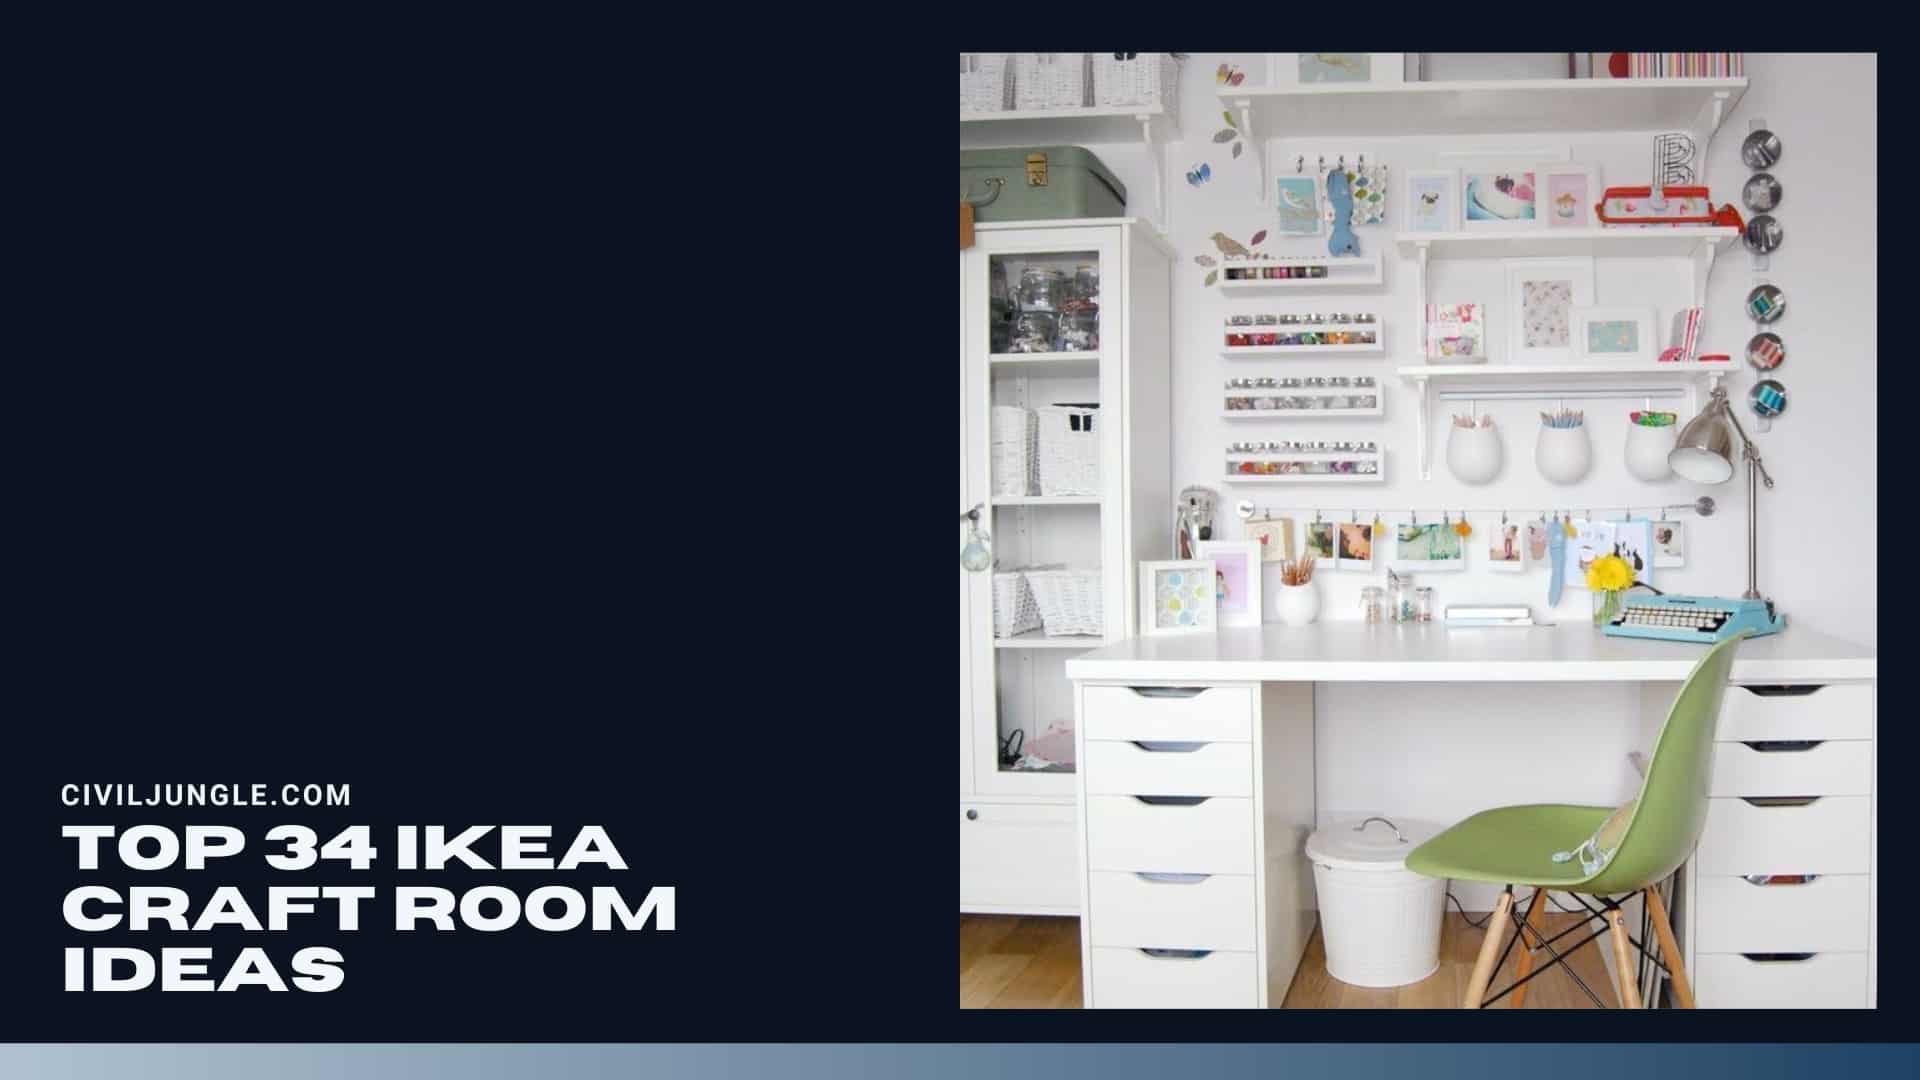 Top 34 Ikea Craft Room Ideas